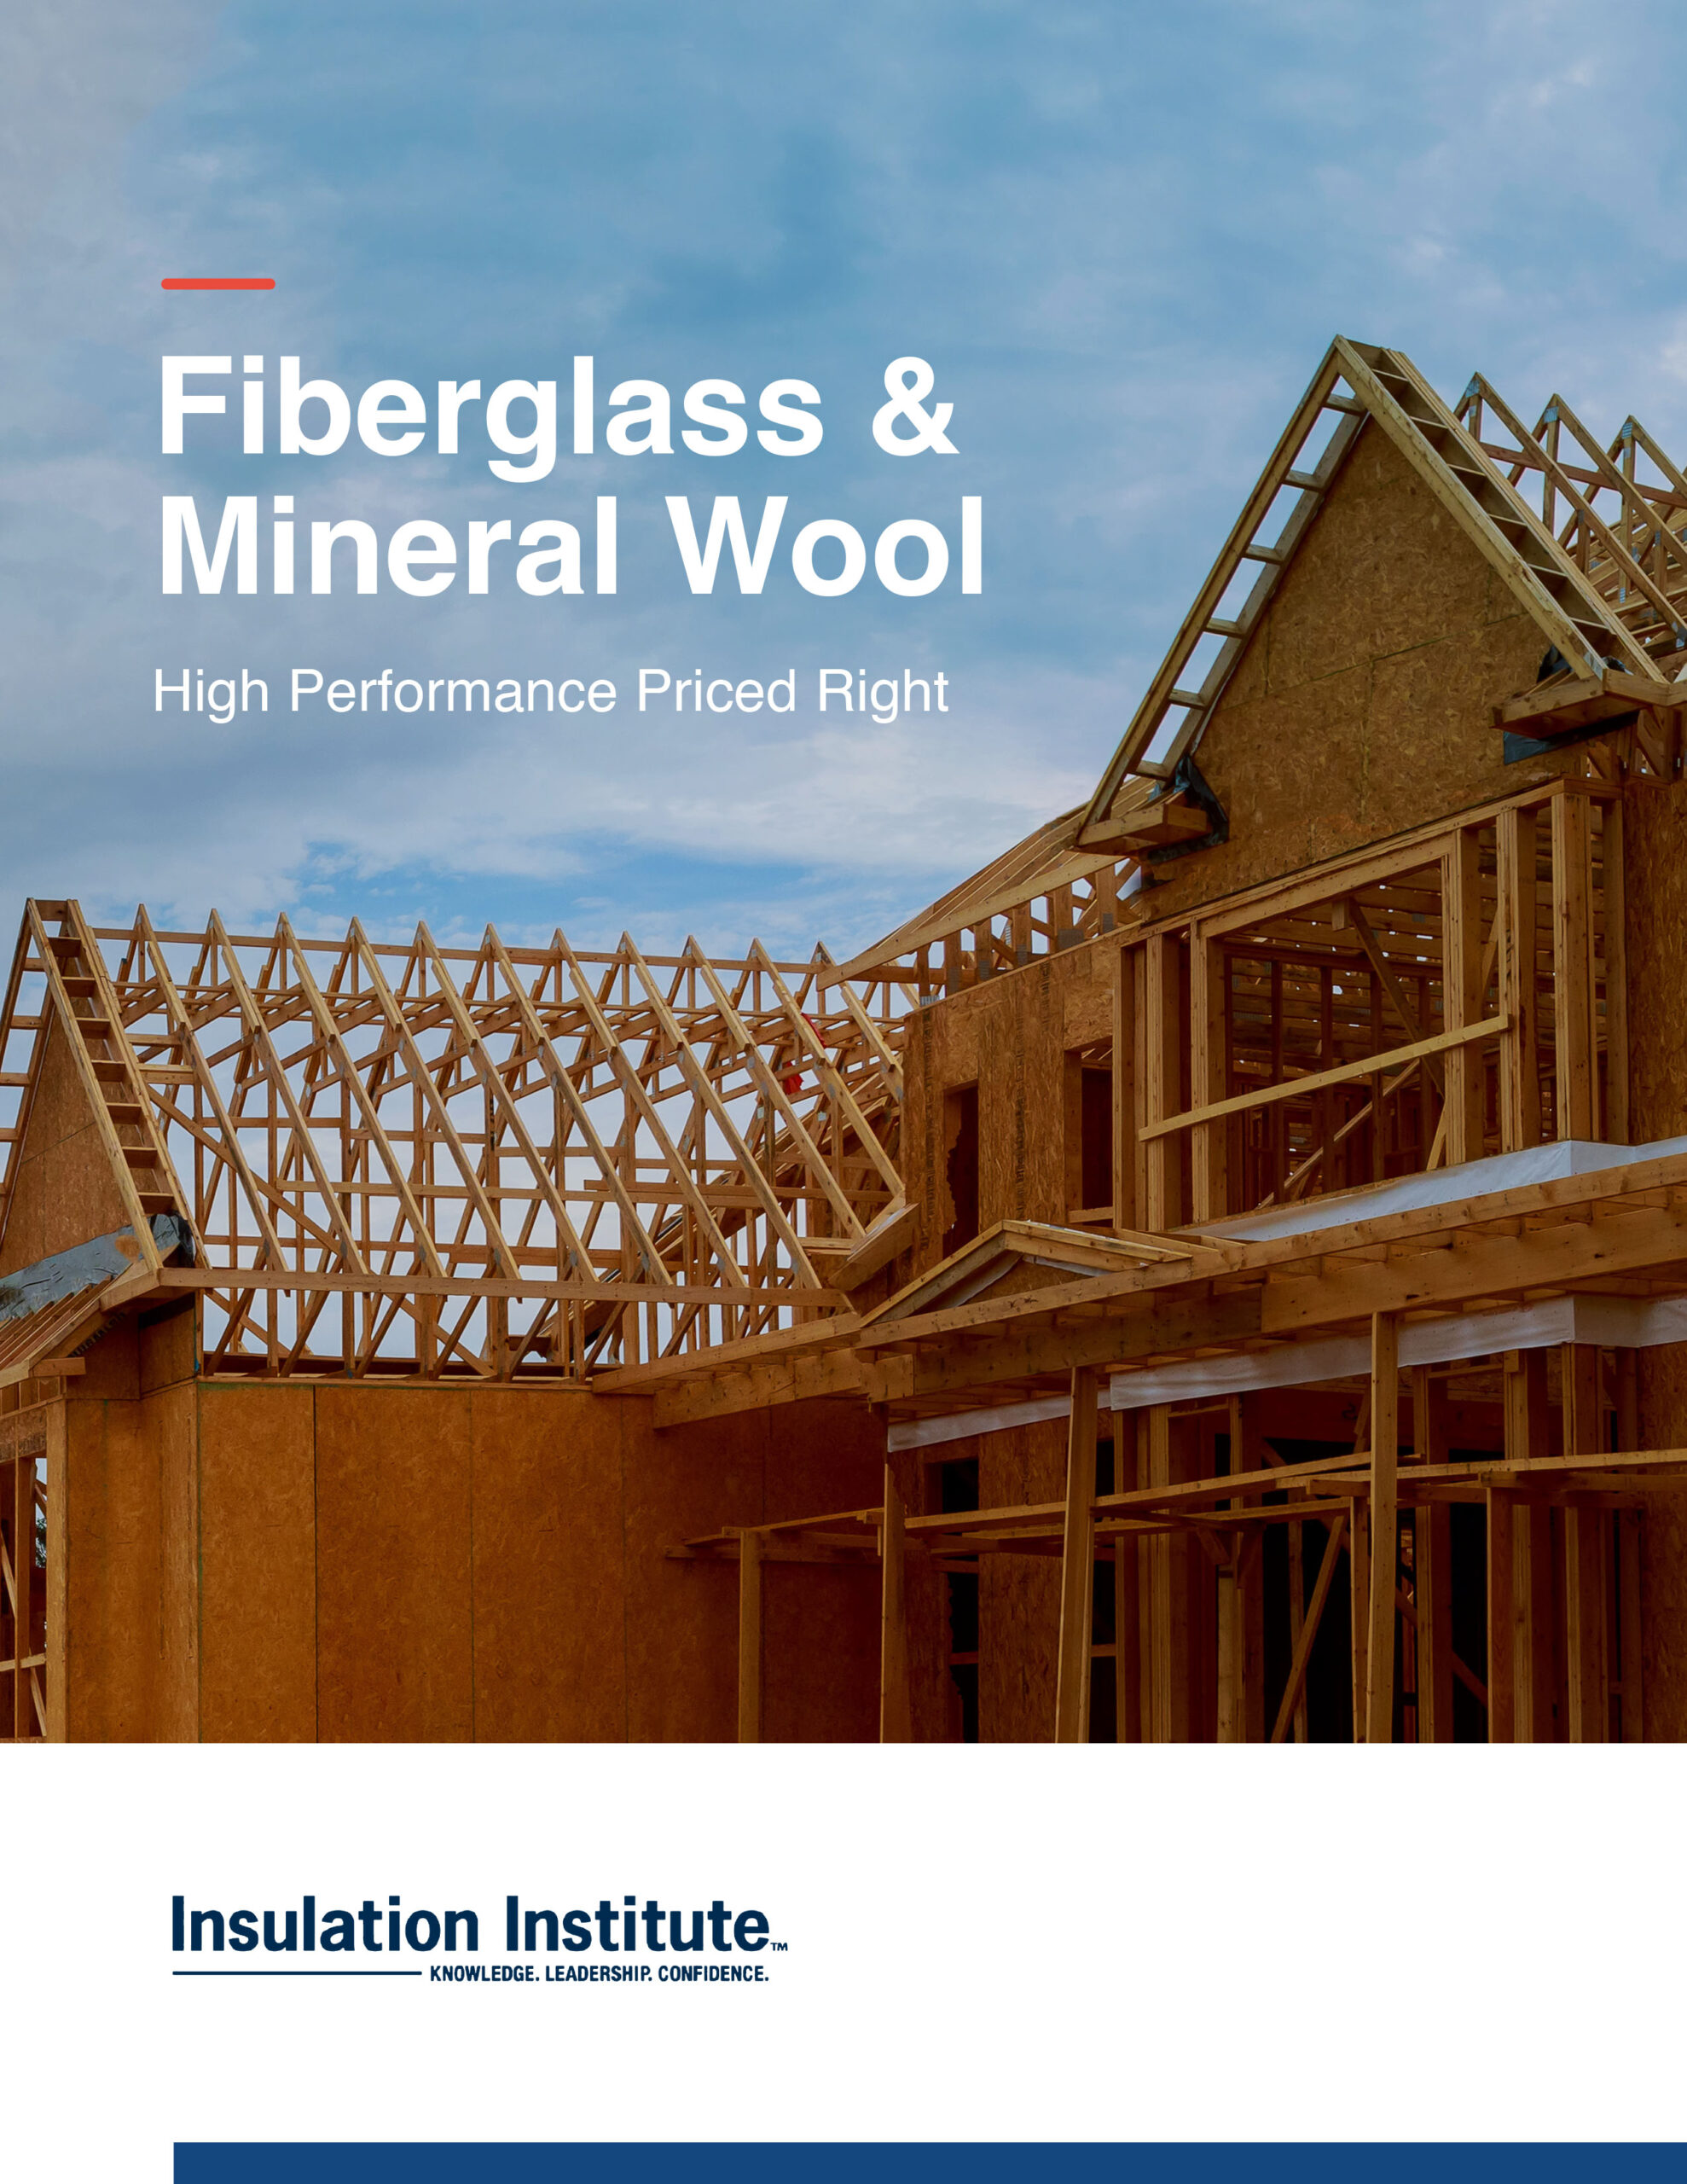 Fiberglass & Mineral Wool: High Performance Priced Right